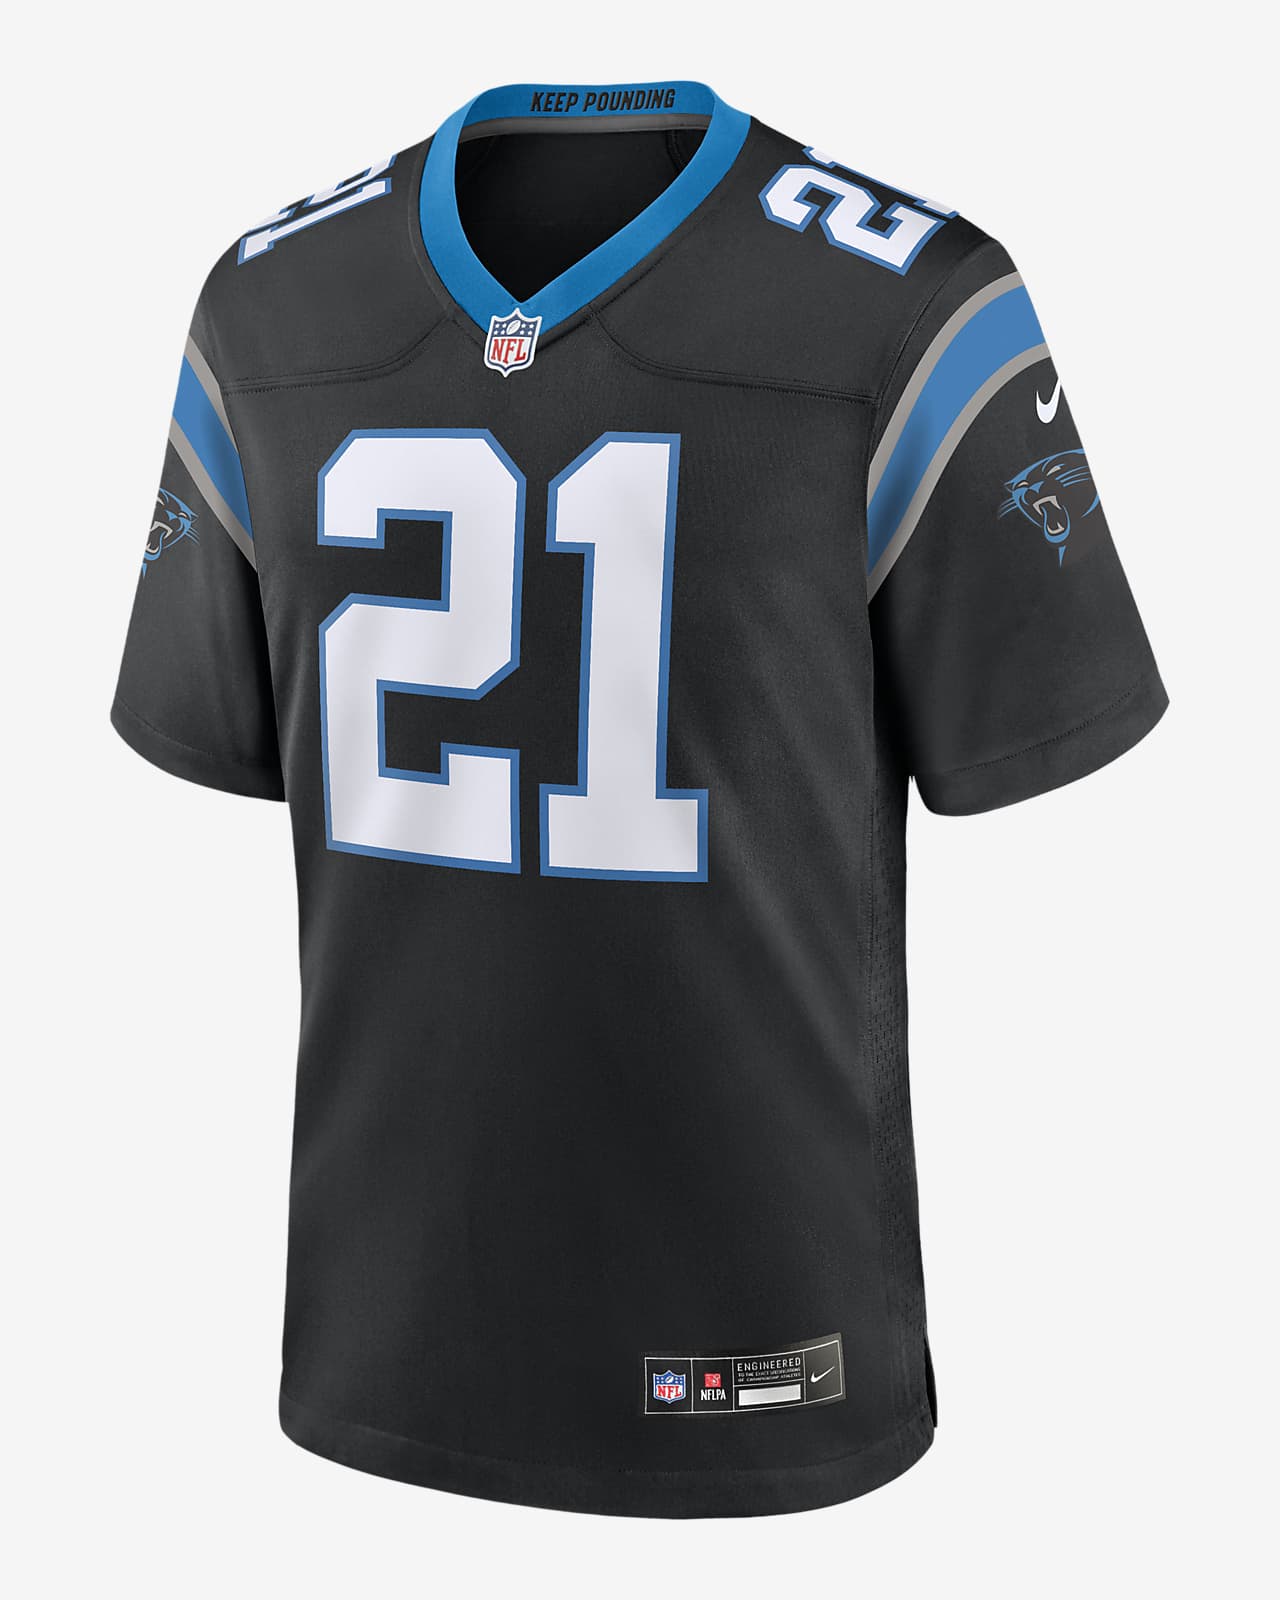 Jersey de fútbol americano Nike de la NFL Game para hombre Jeremy Chinn Carolina Panthers